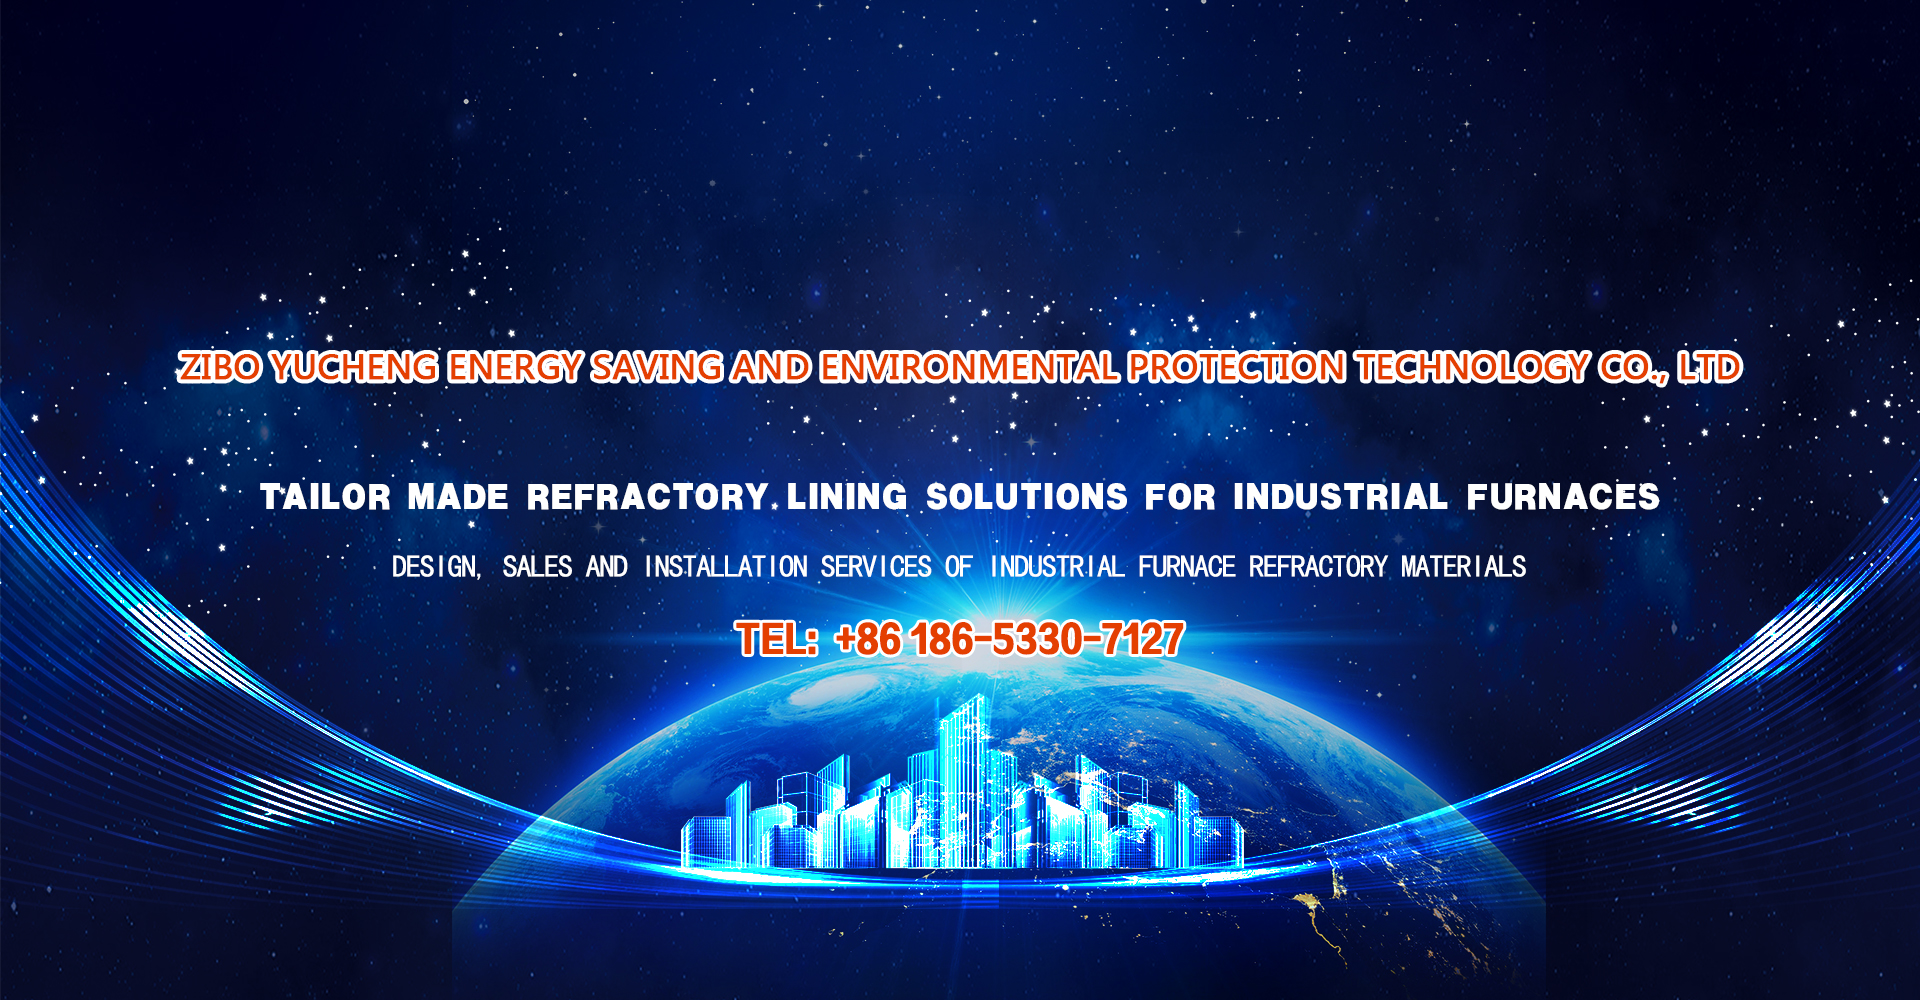 Zibo Yucheng energy saving and Environmental Protection Technology Co., Ltd